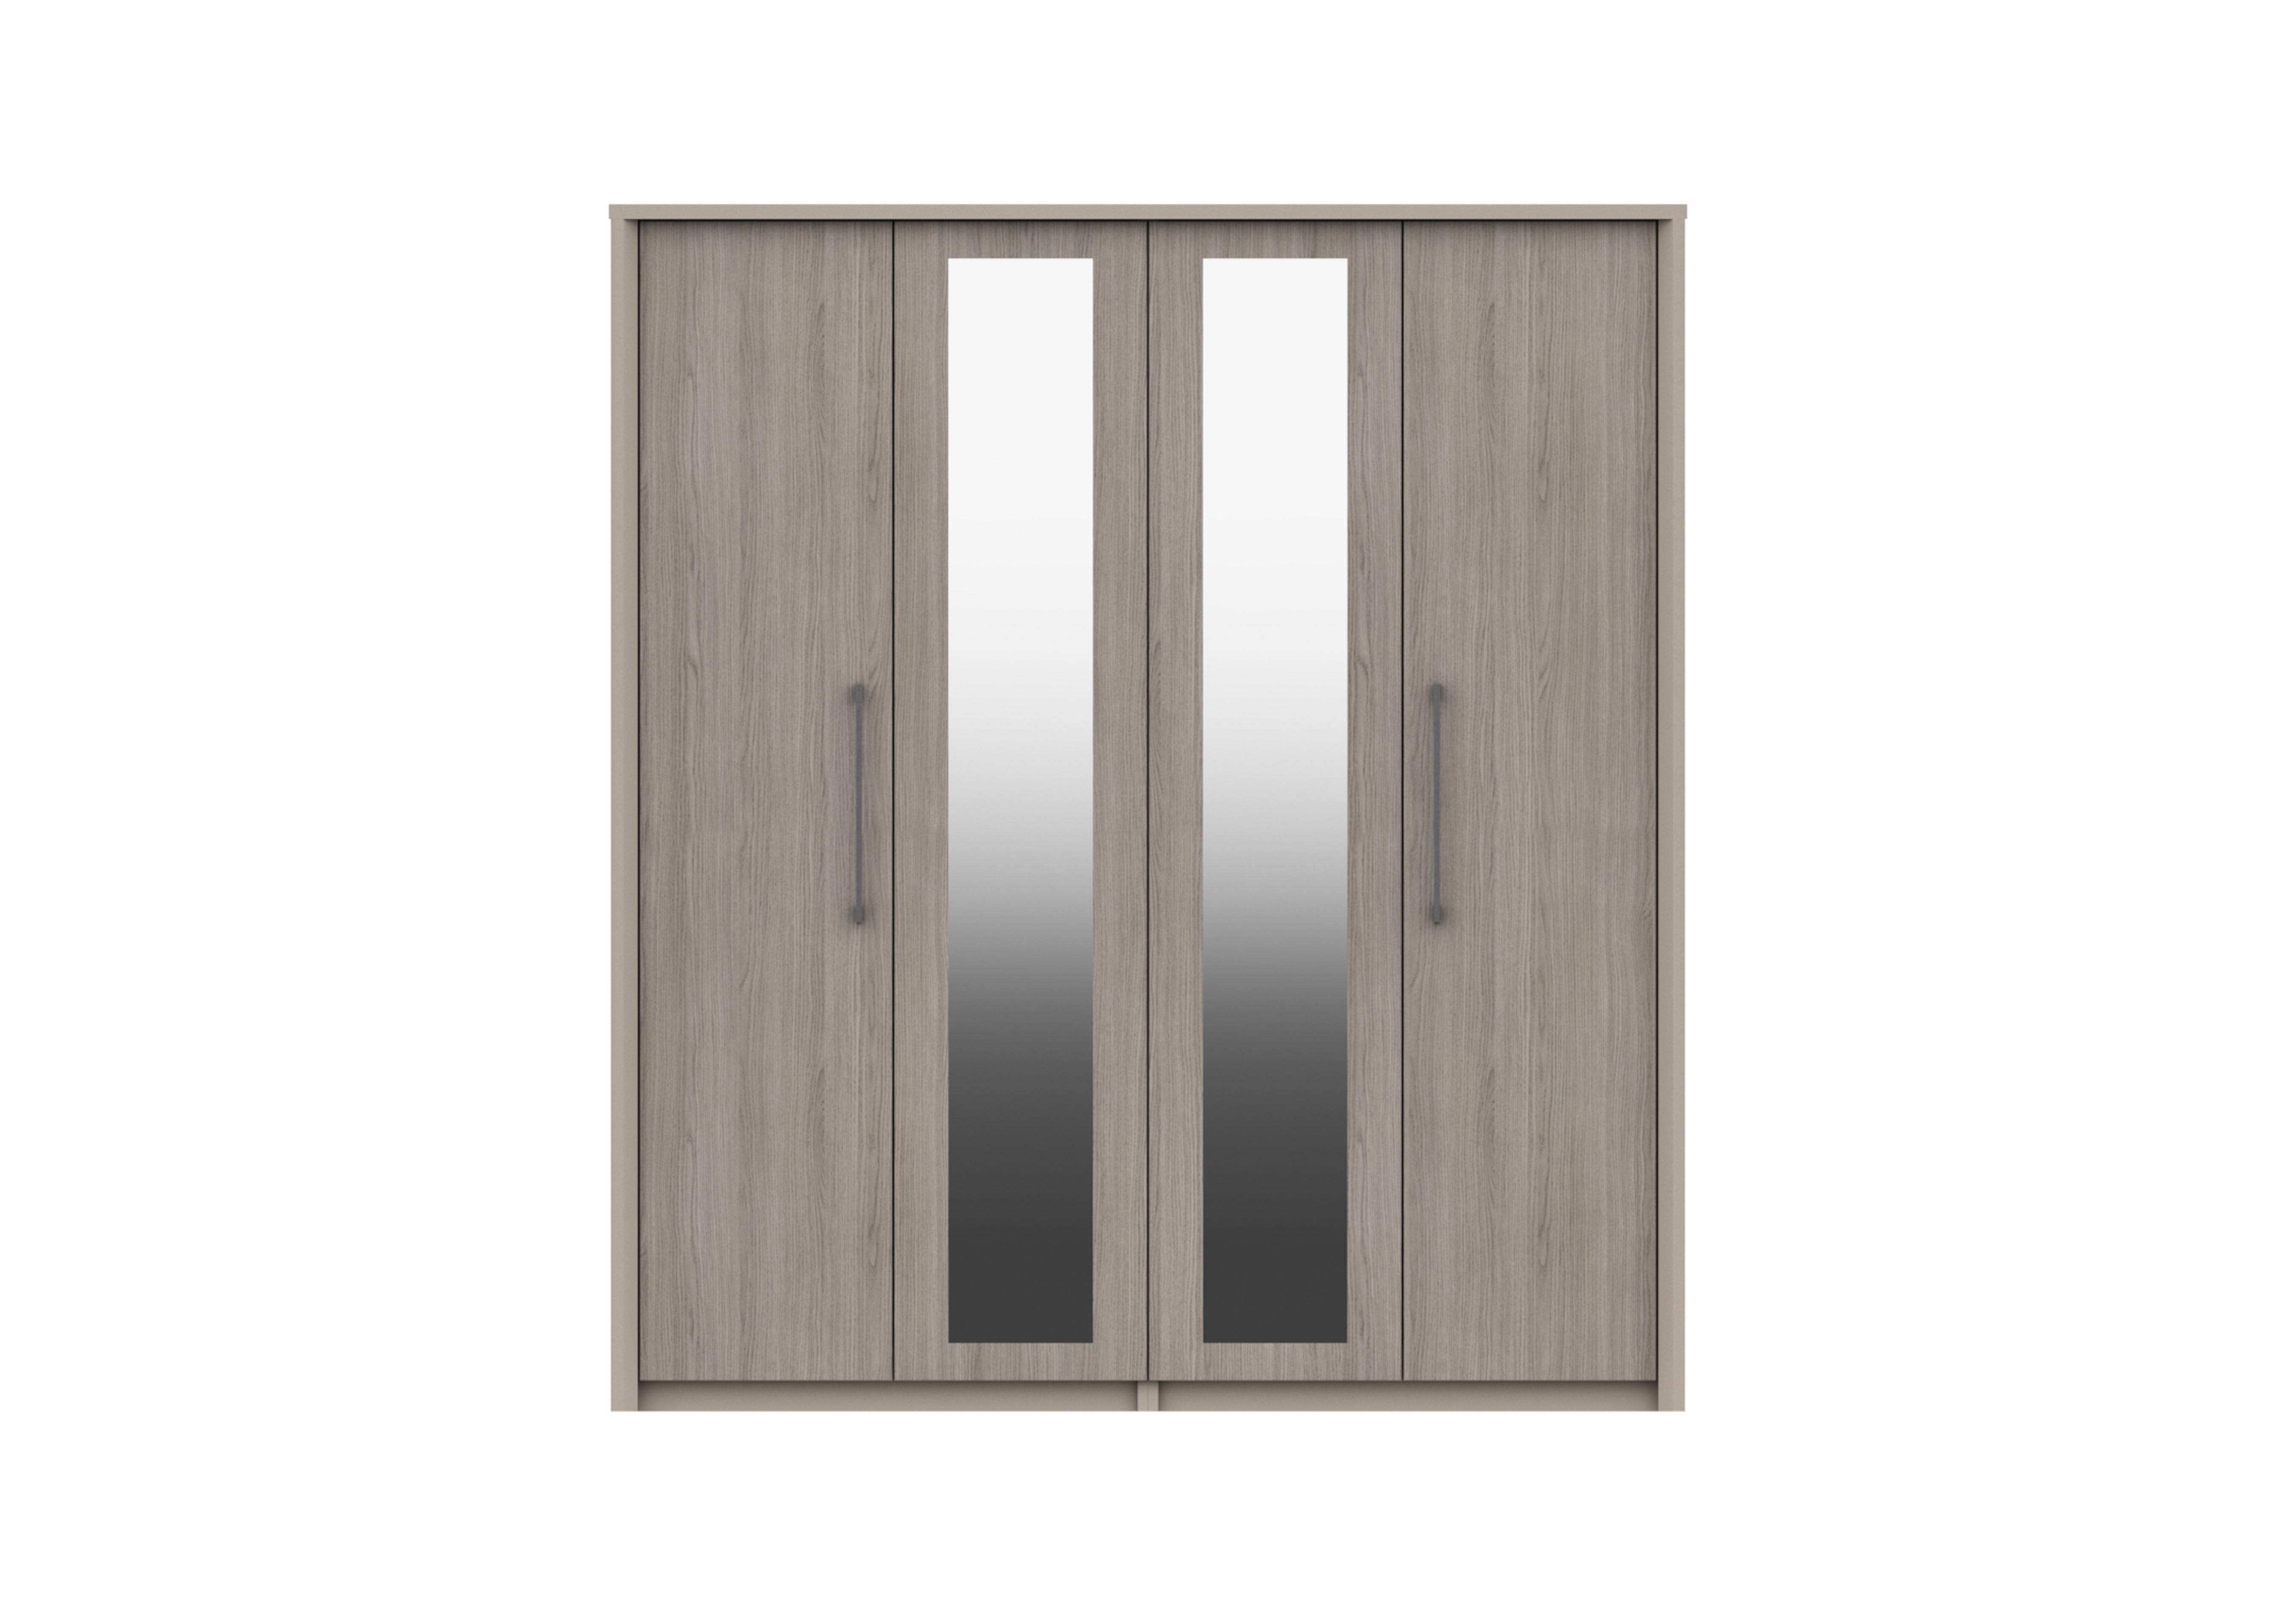 Paddington 4 Door Wardrobe with Mirrors in Fired Earth/Grey Oak on Furniture Village